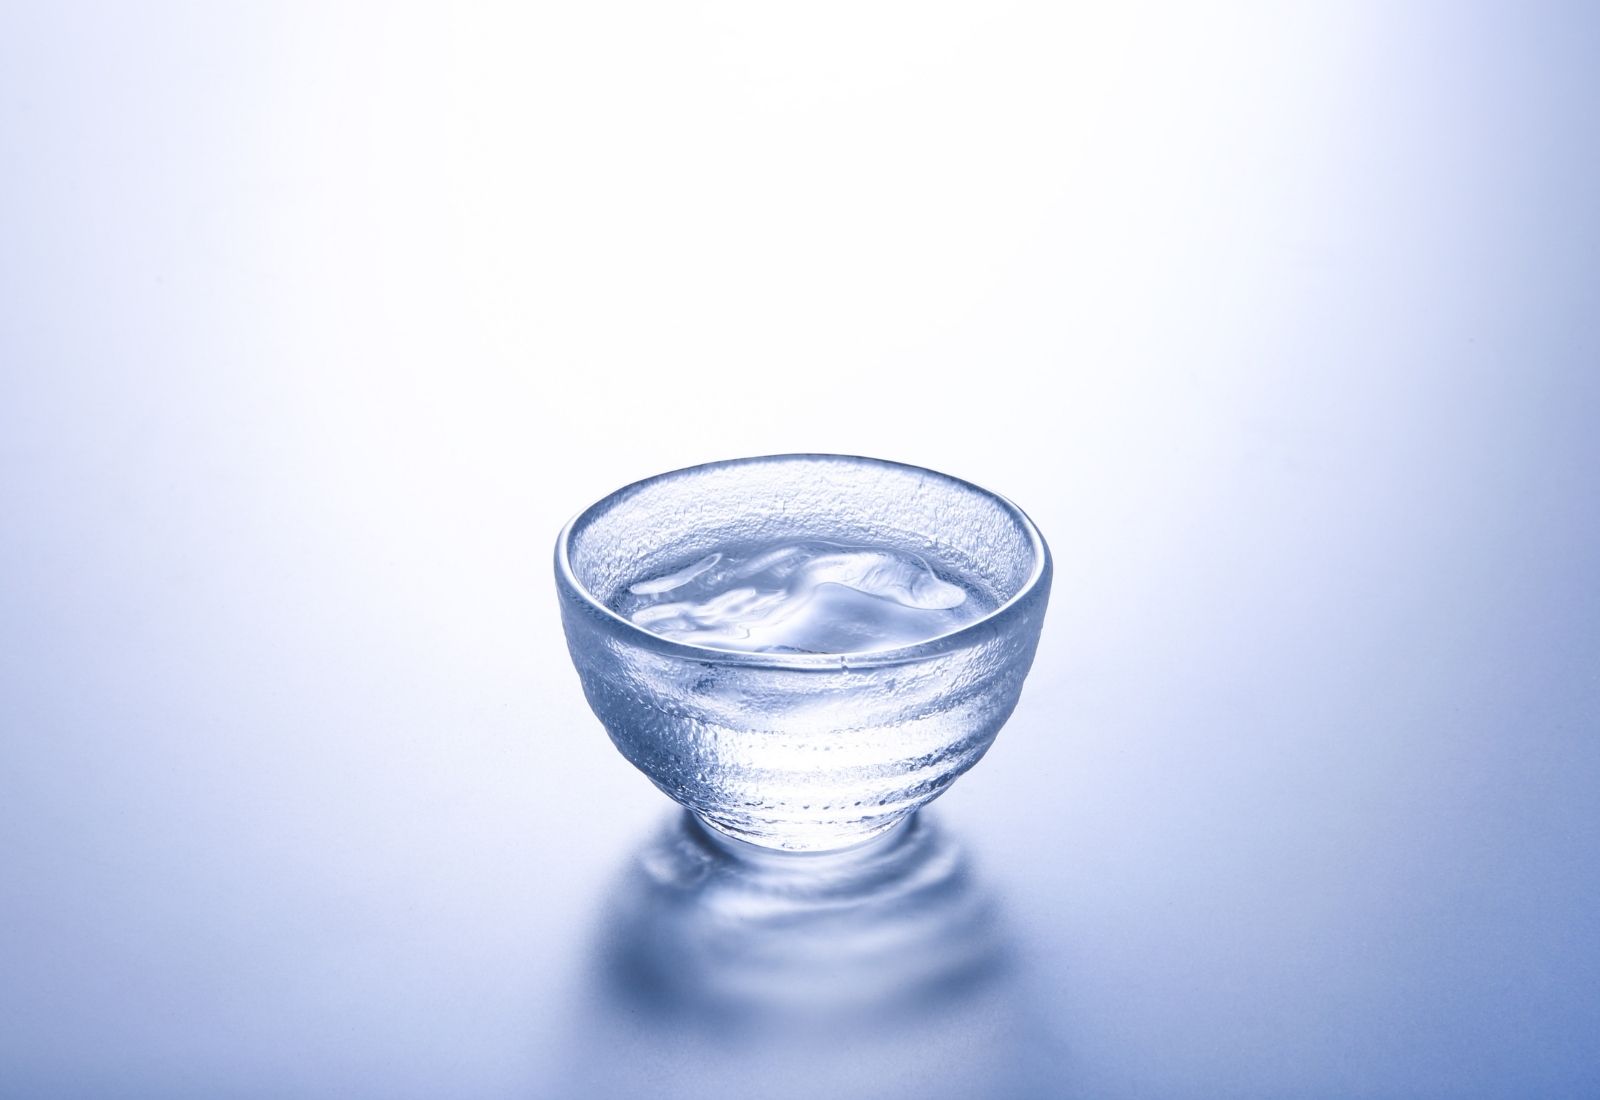 bicchieri-sake-tenoha-milano-vetro